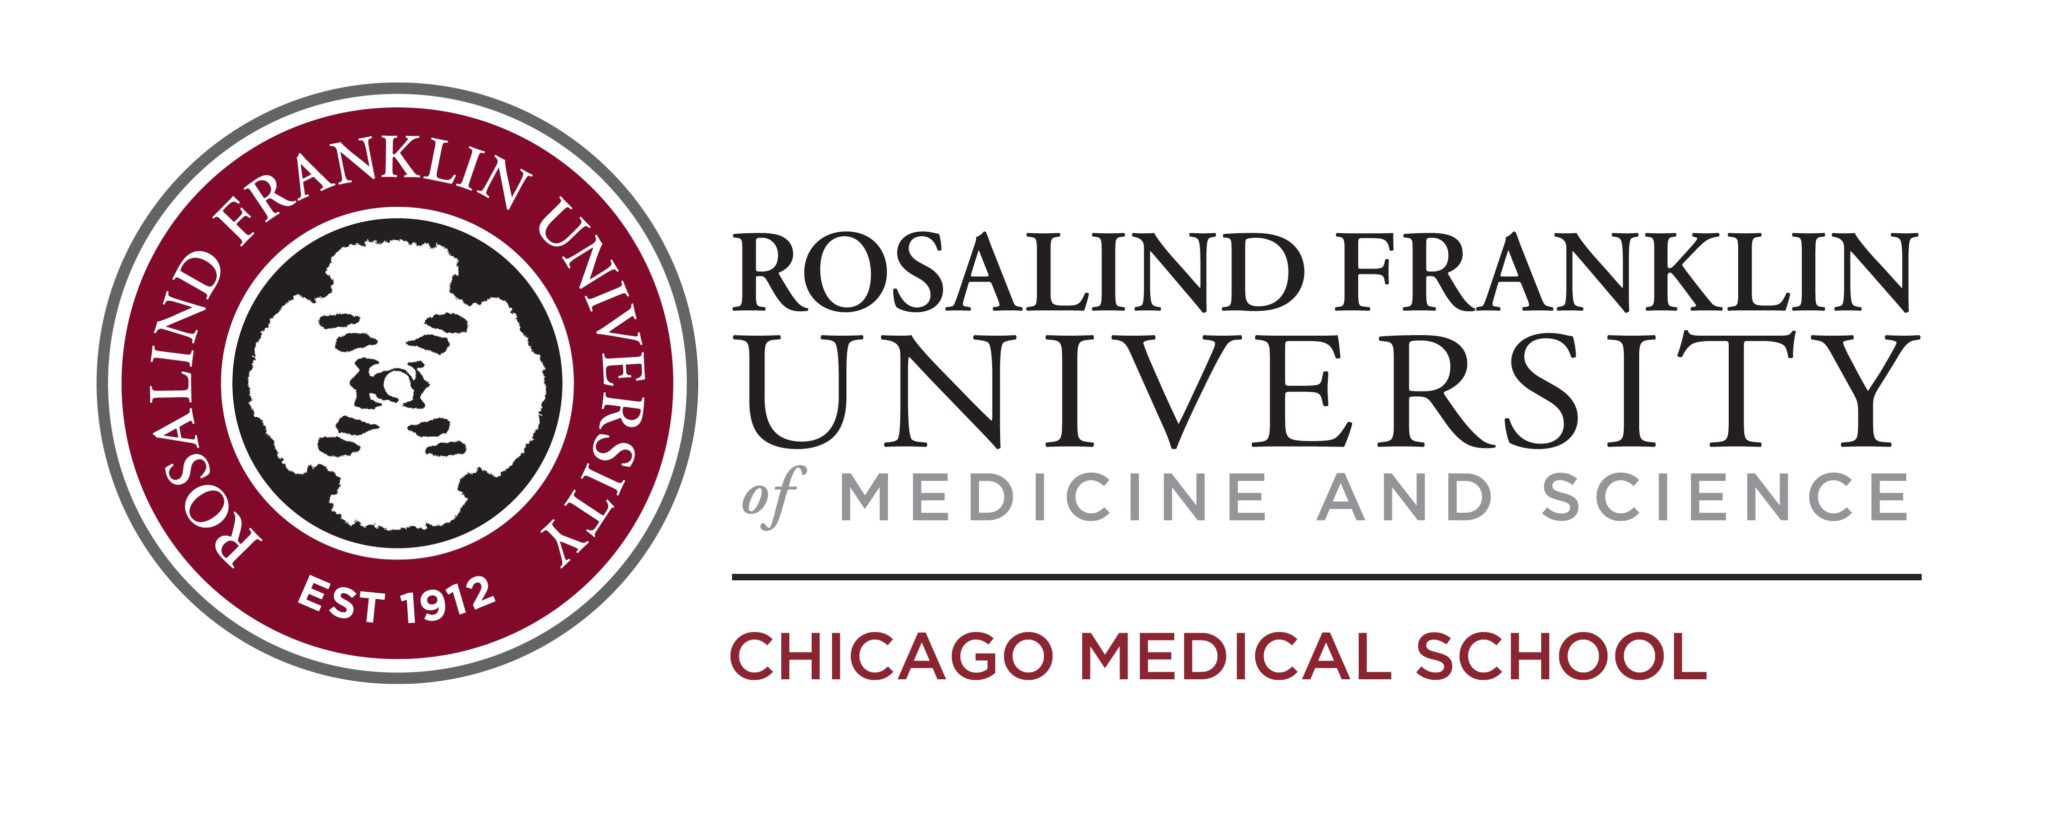 Logo reading Rosalind Franklin University of Medicine and Science Chicago Medical School